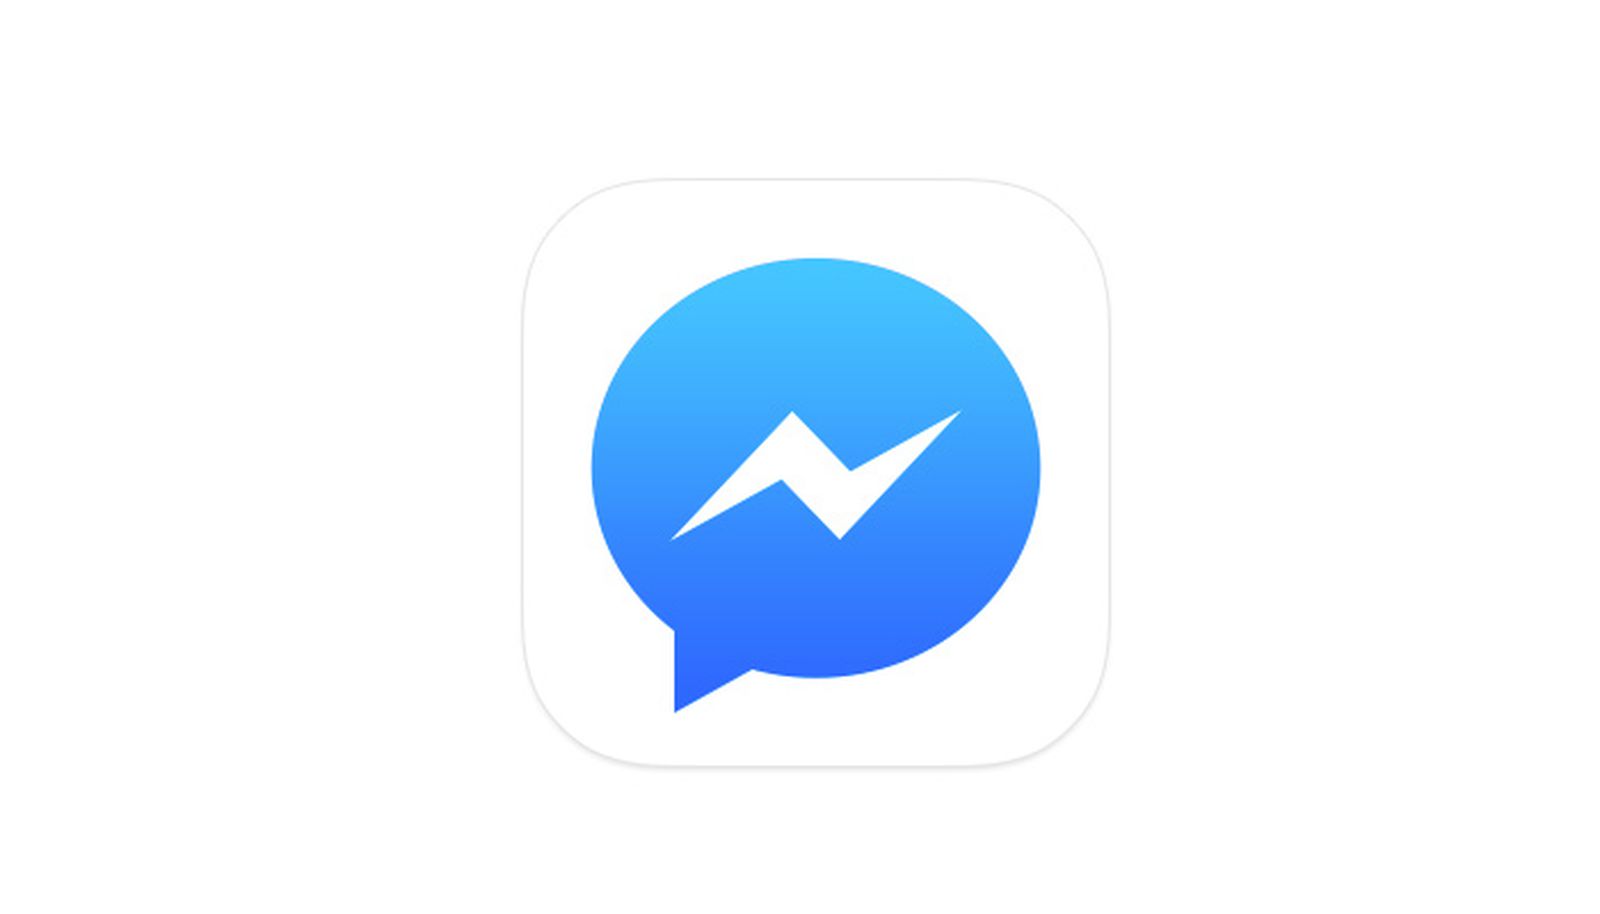 facebook messenger iphone icon